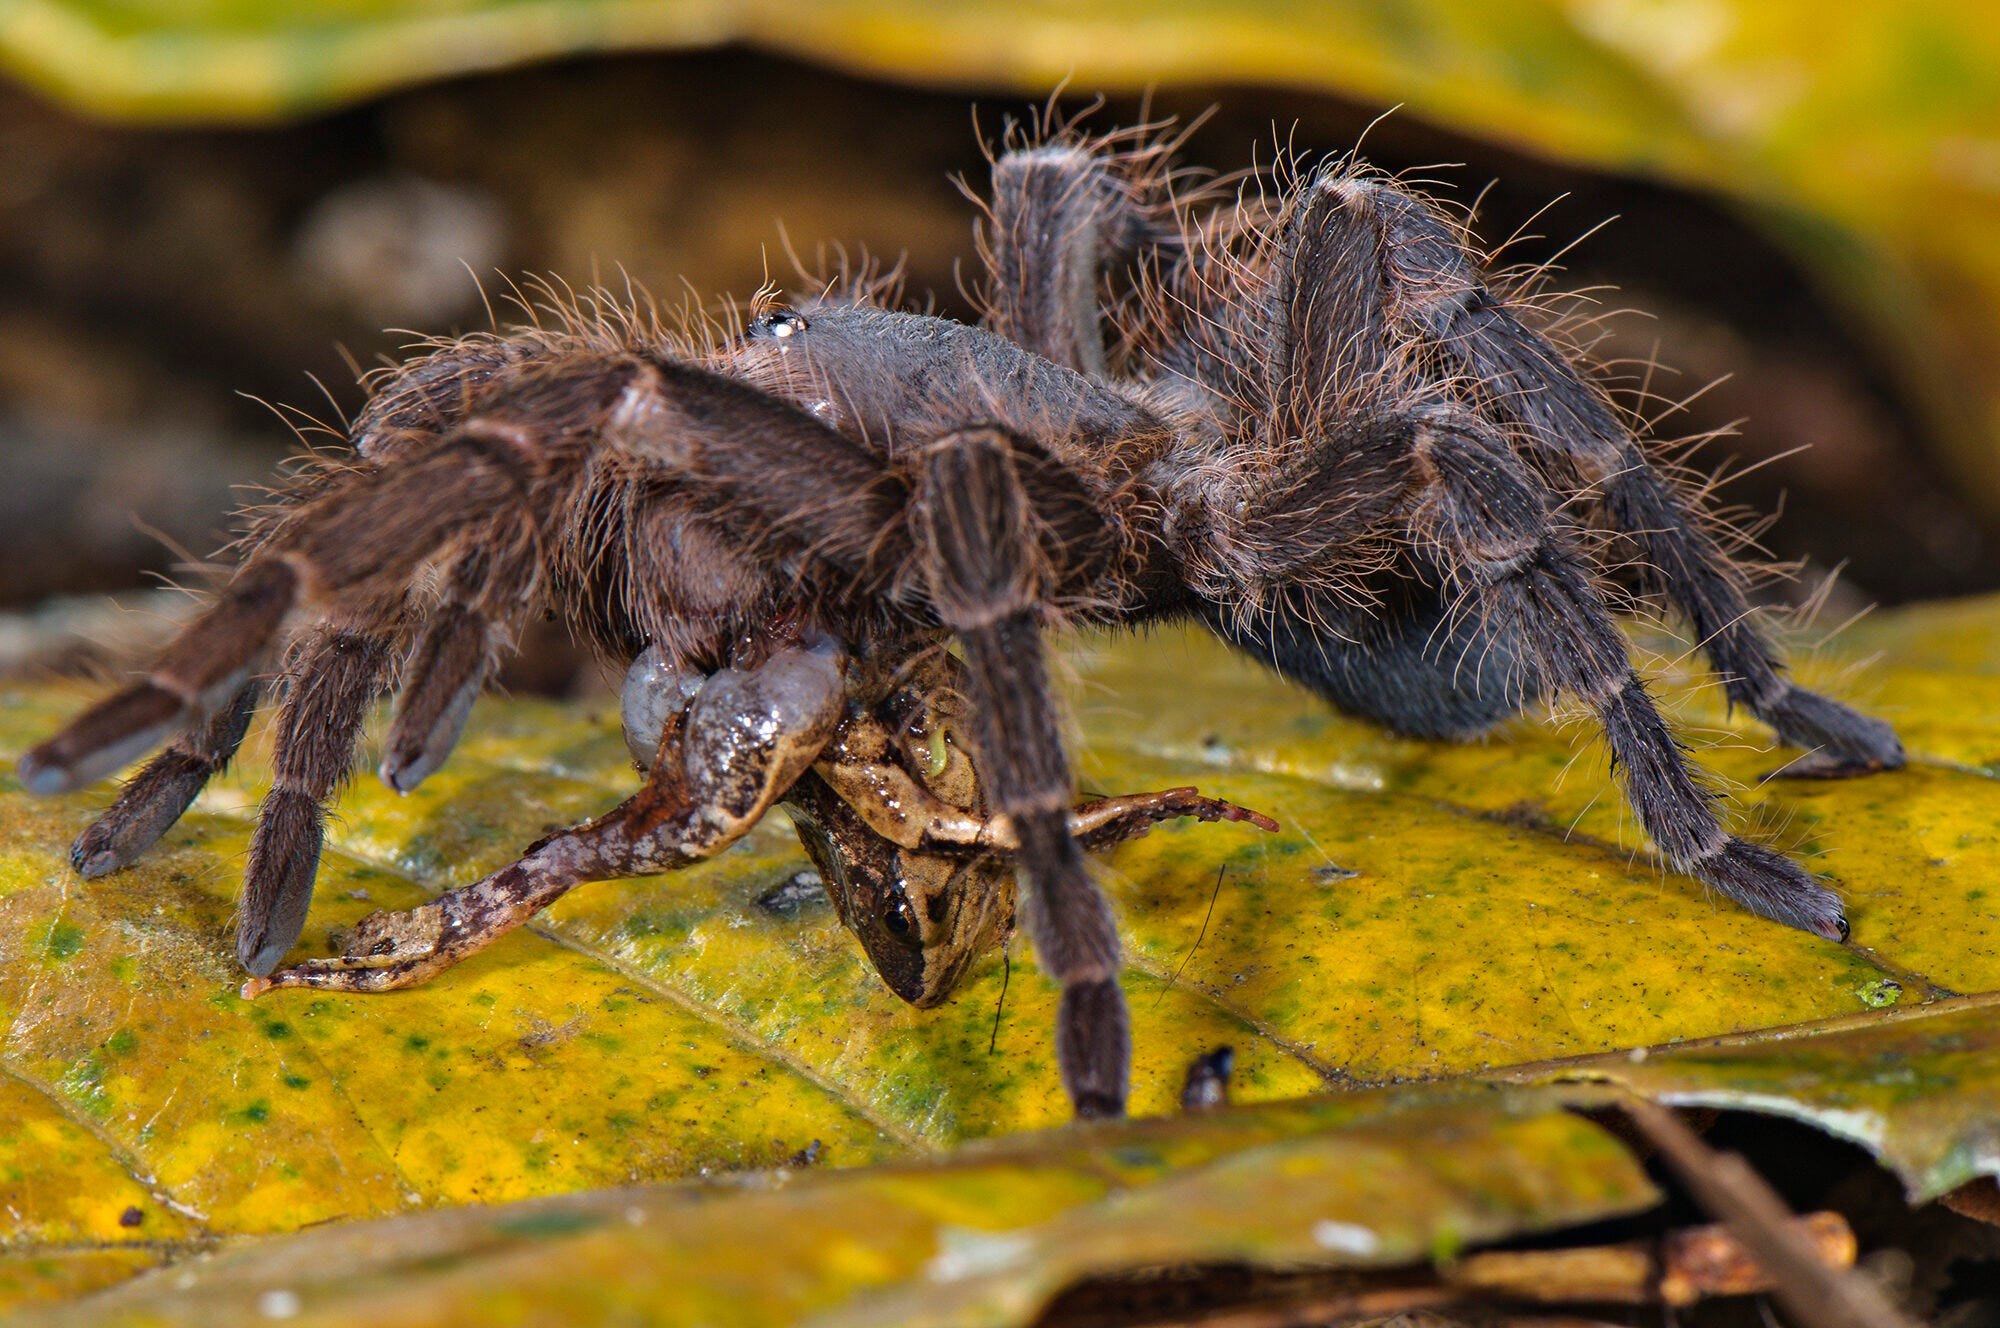 Polisi Brussel menemukan tarantula, kalajengking selama penggerebekan narkoba